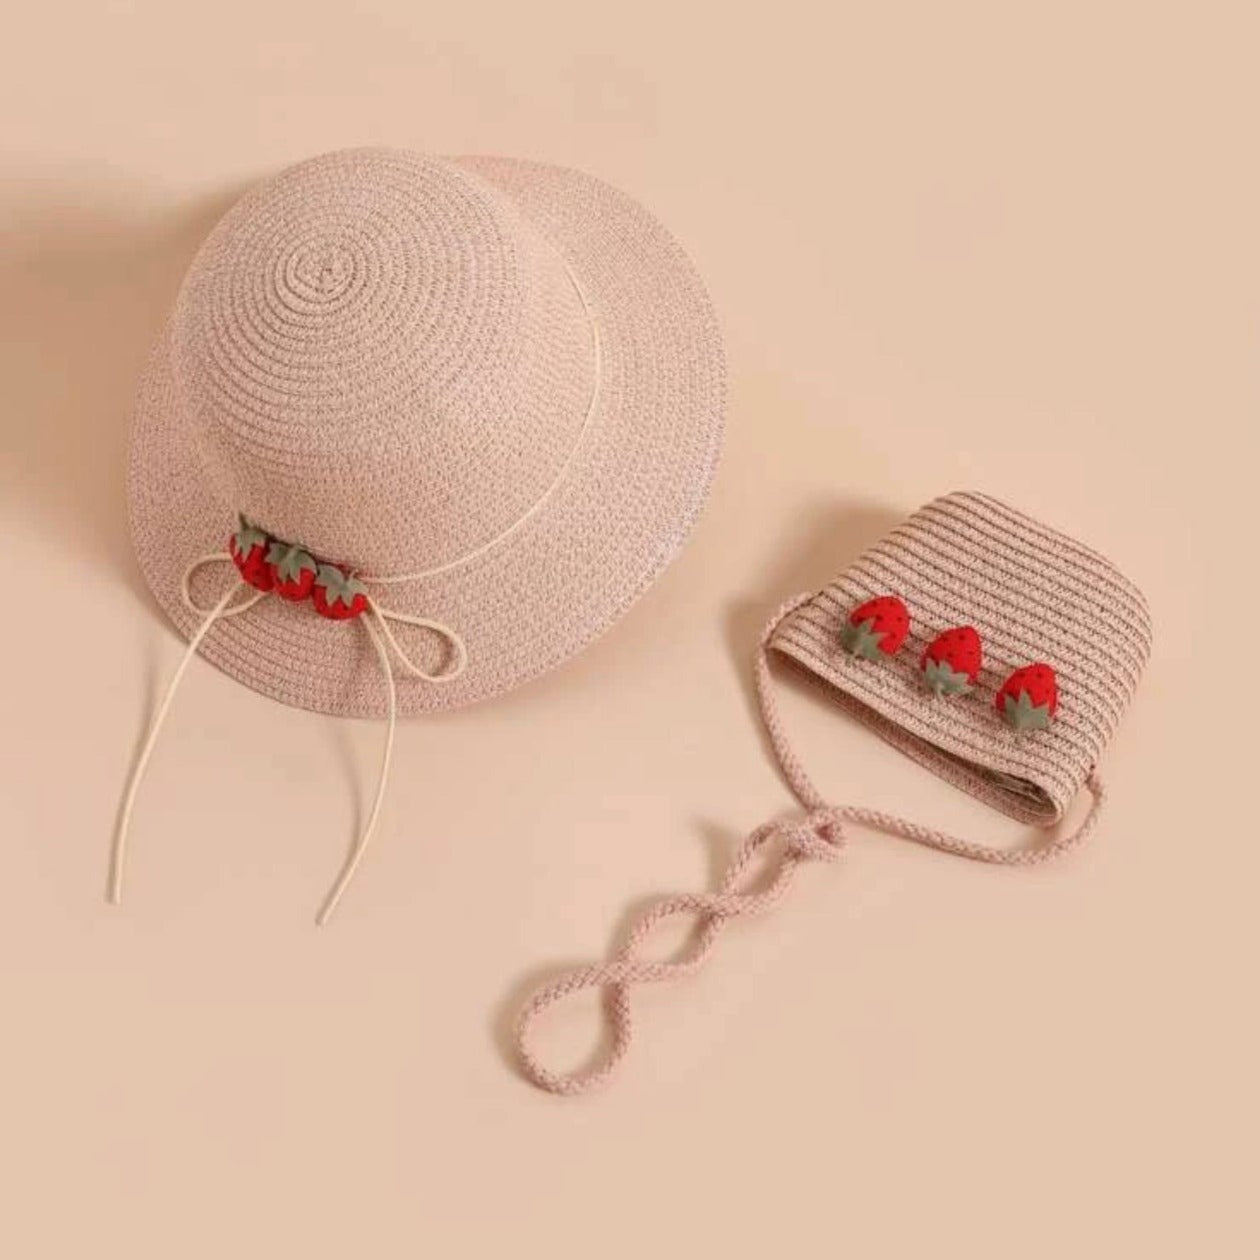 Strawberry decor hat & bag